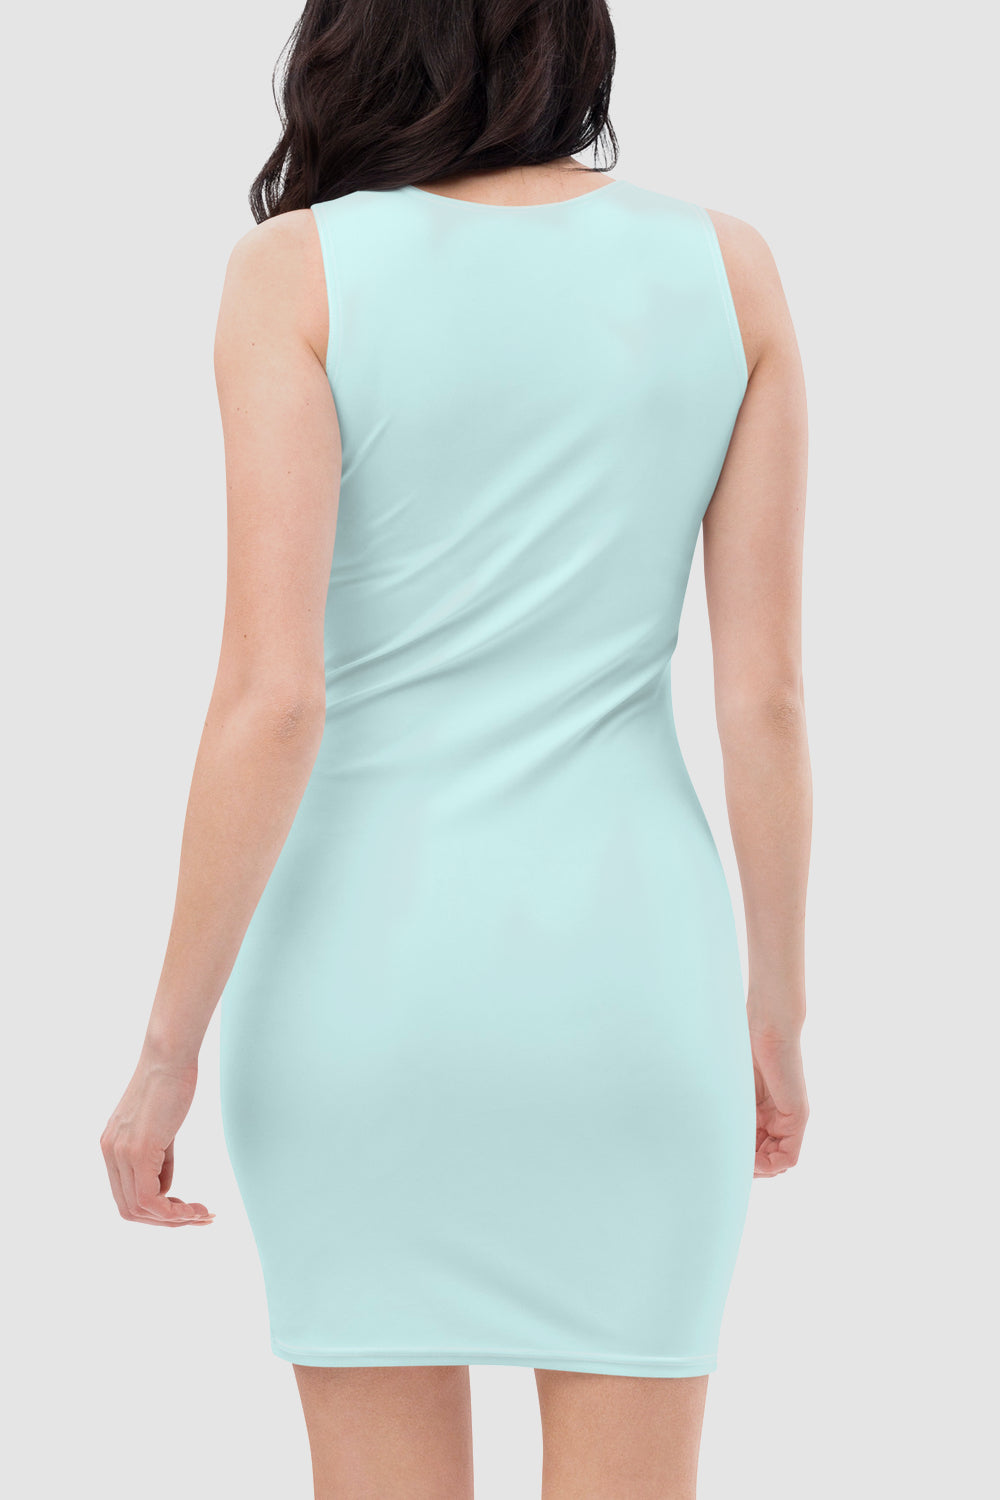 Save The Boobs Women's Sleeveless Fitted Mini Dress OniTakai